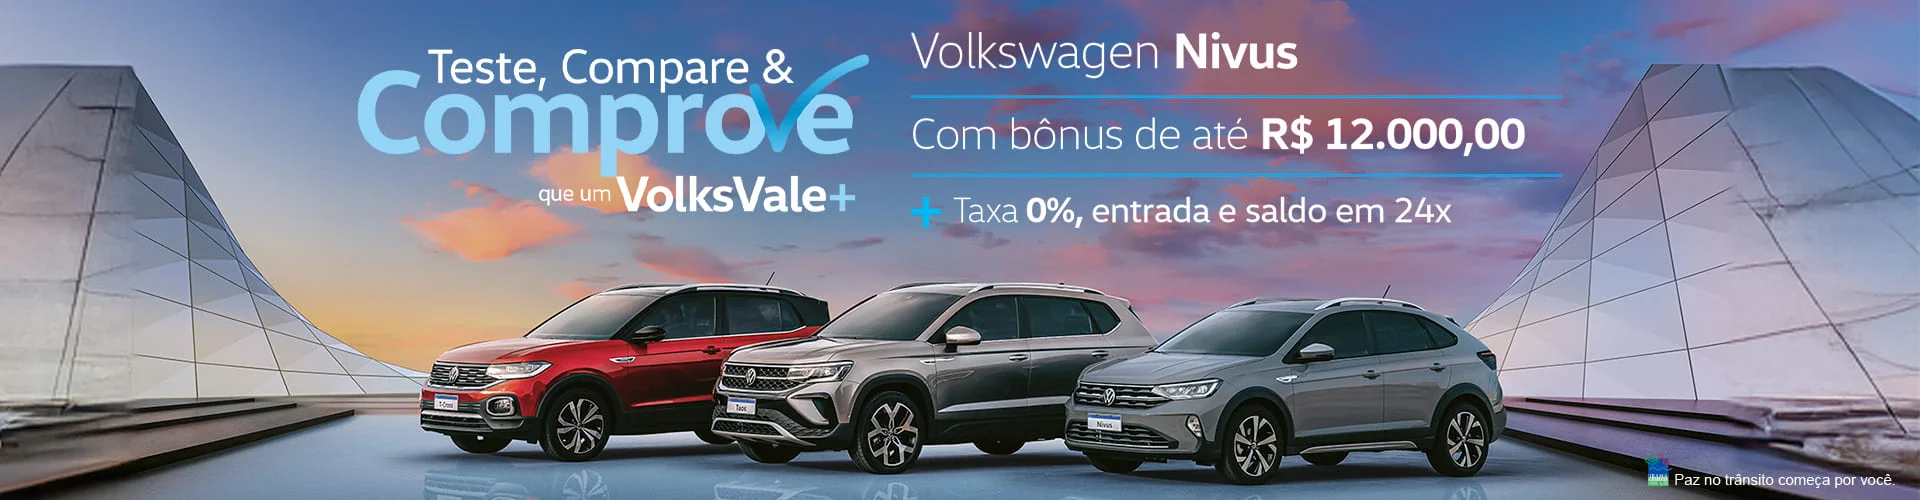 Volkswagen Germanica nivus taxa zero melhor preço sao paulo